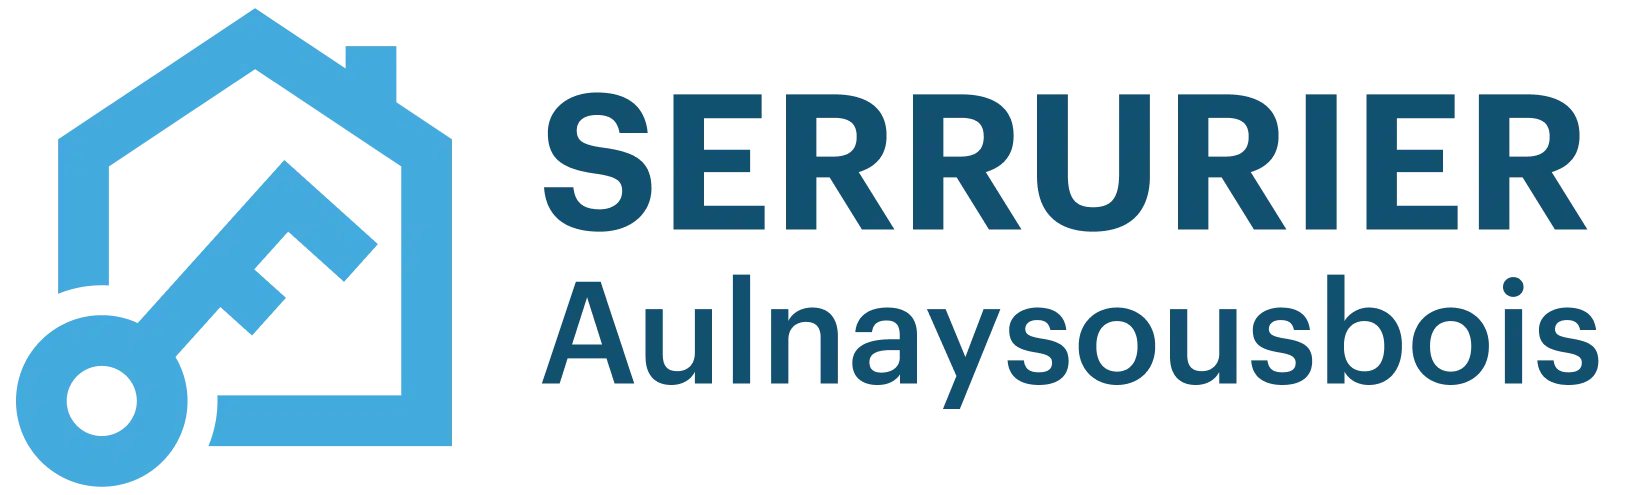 Logo Serrurier Aulnay-sous-Bois (93600)